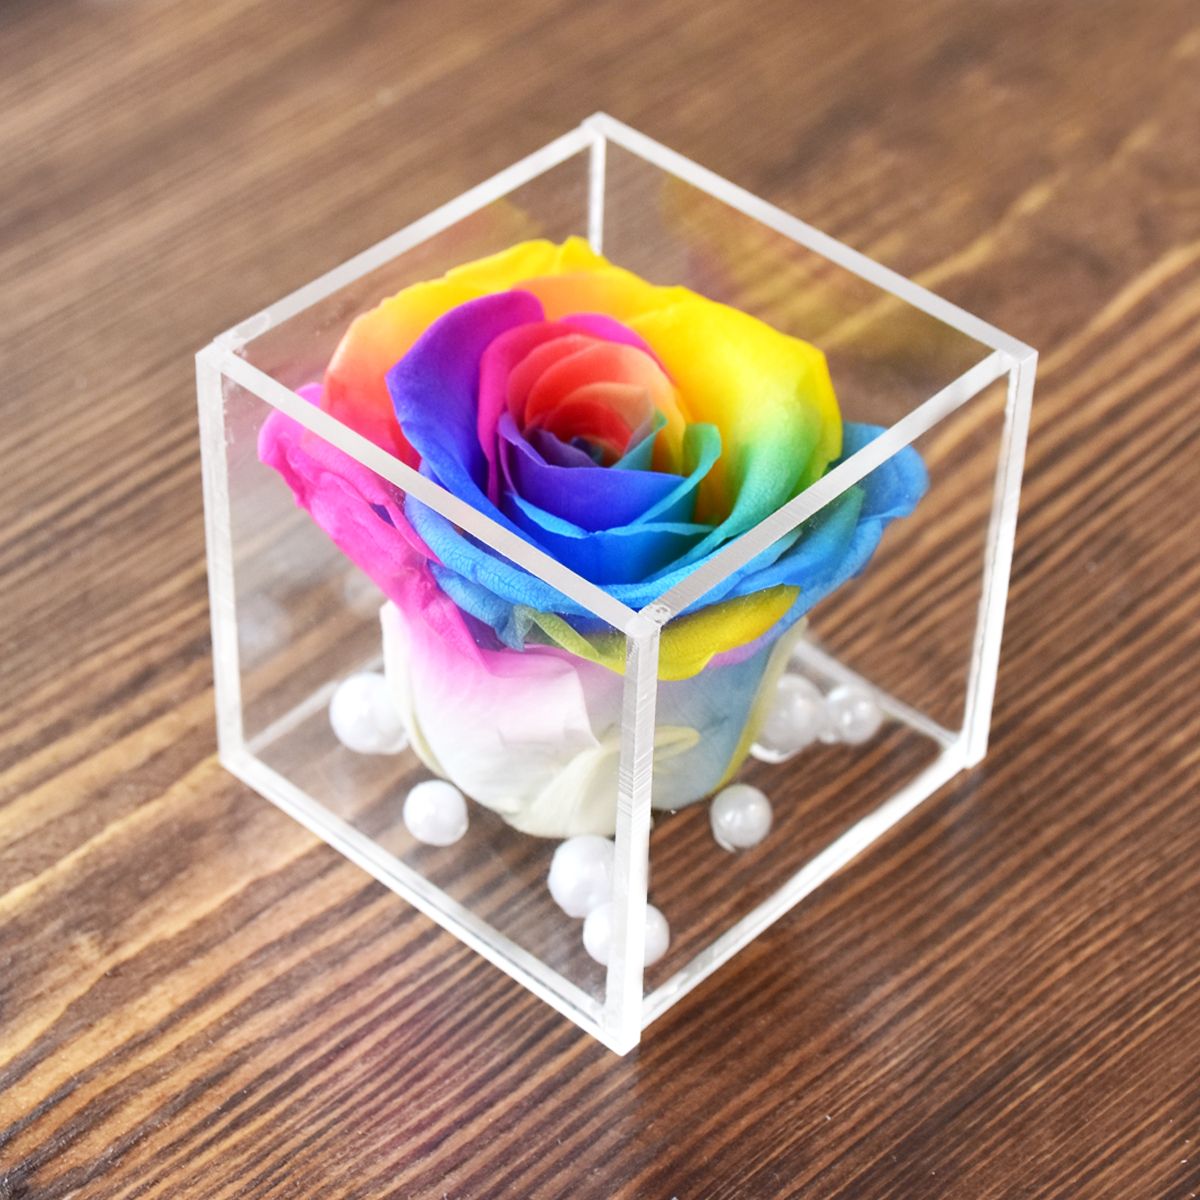 Real Preserved Forever Rose Rainbow Online | Long Lasting Flower - Giftcart